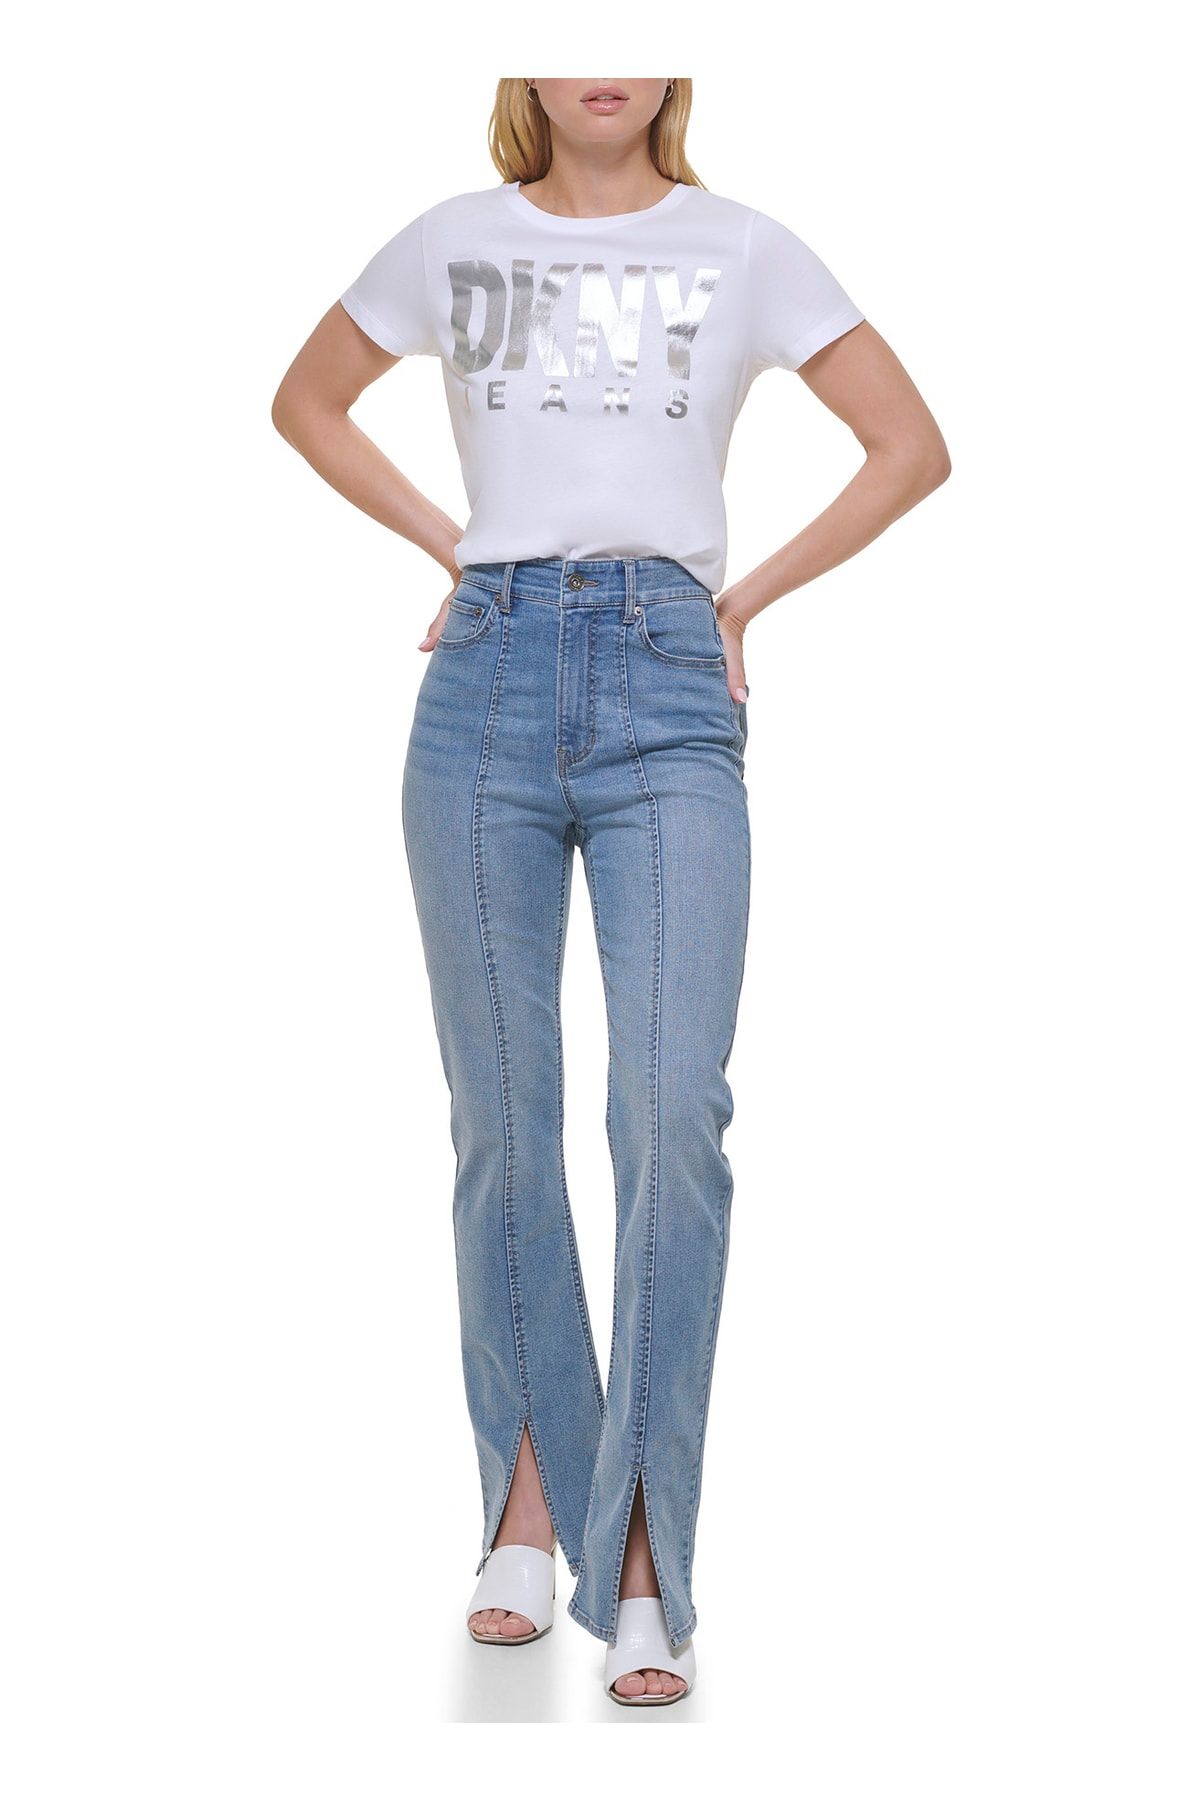 Dkny Jeans Bisiklet Yaka Baskılı Beyaz Kadın T-shirt E31hddna